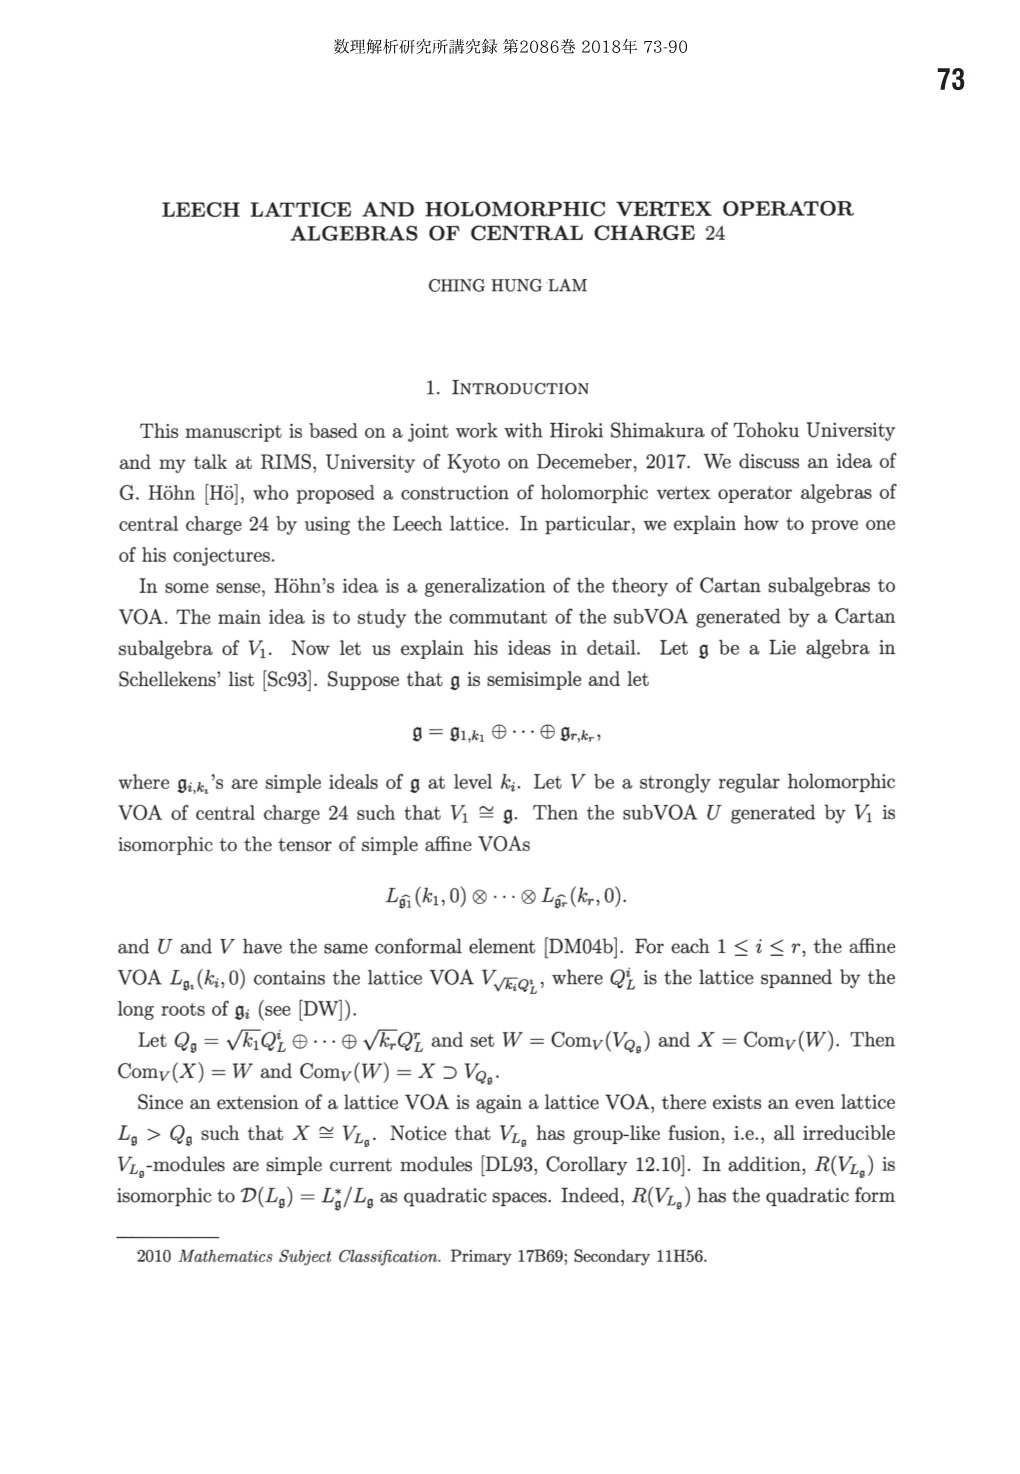 Leech Lattice and Holomorphic Vertex Operator Algebras of Central Charge 24